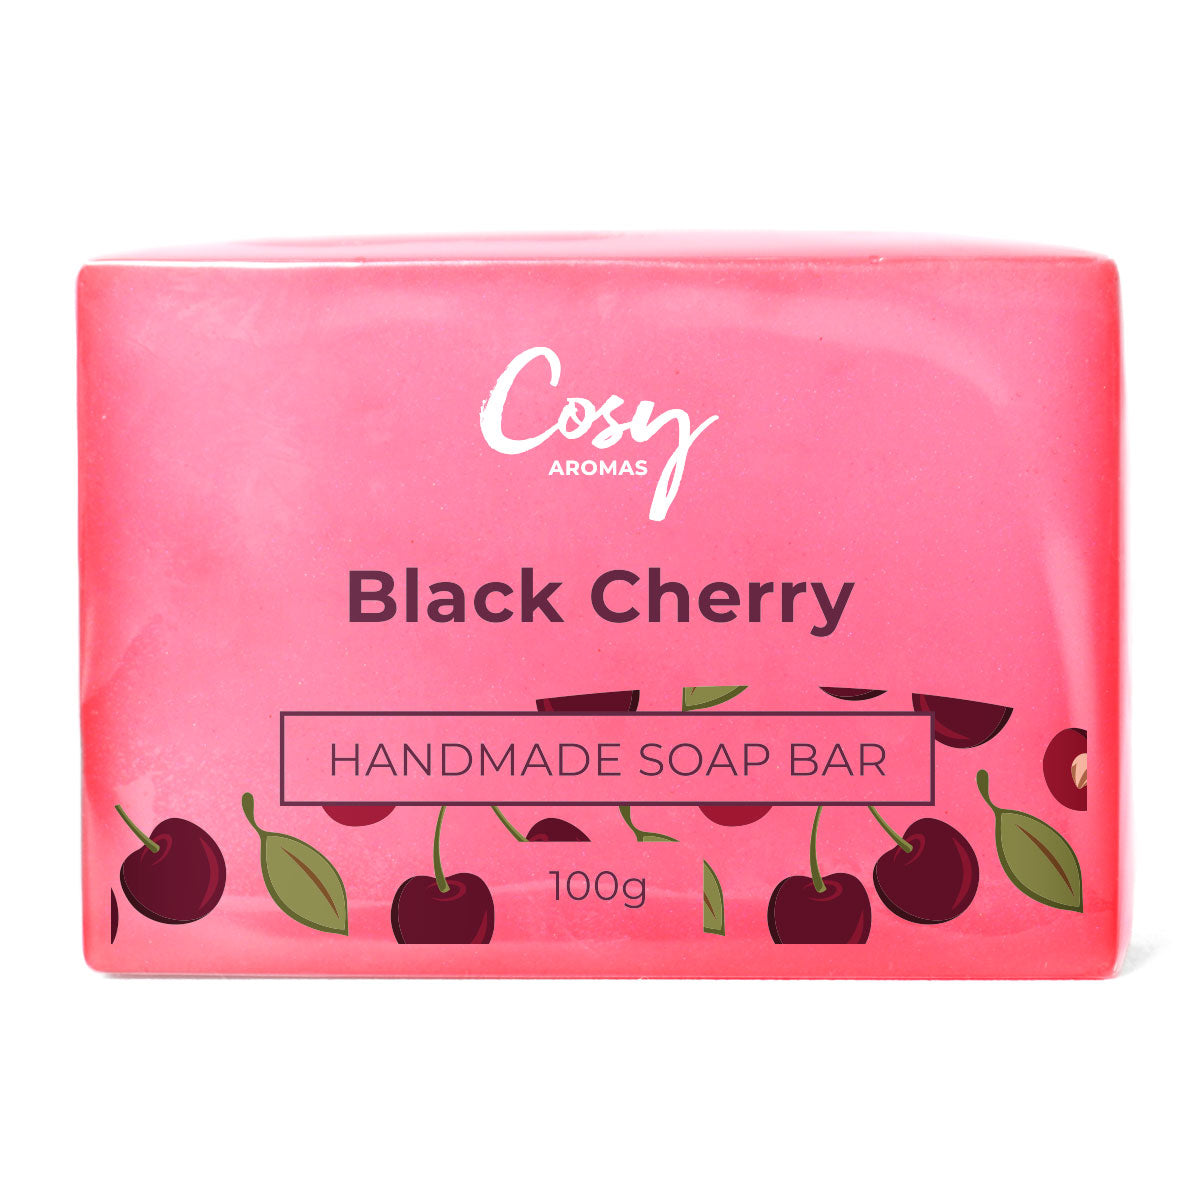 Black Cherry Handmade Soap Bar